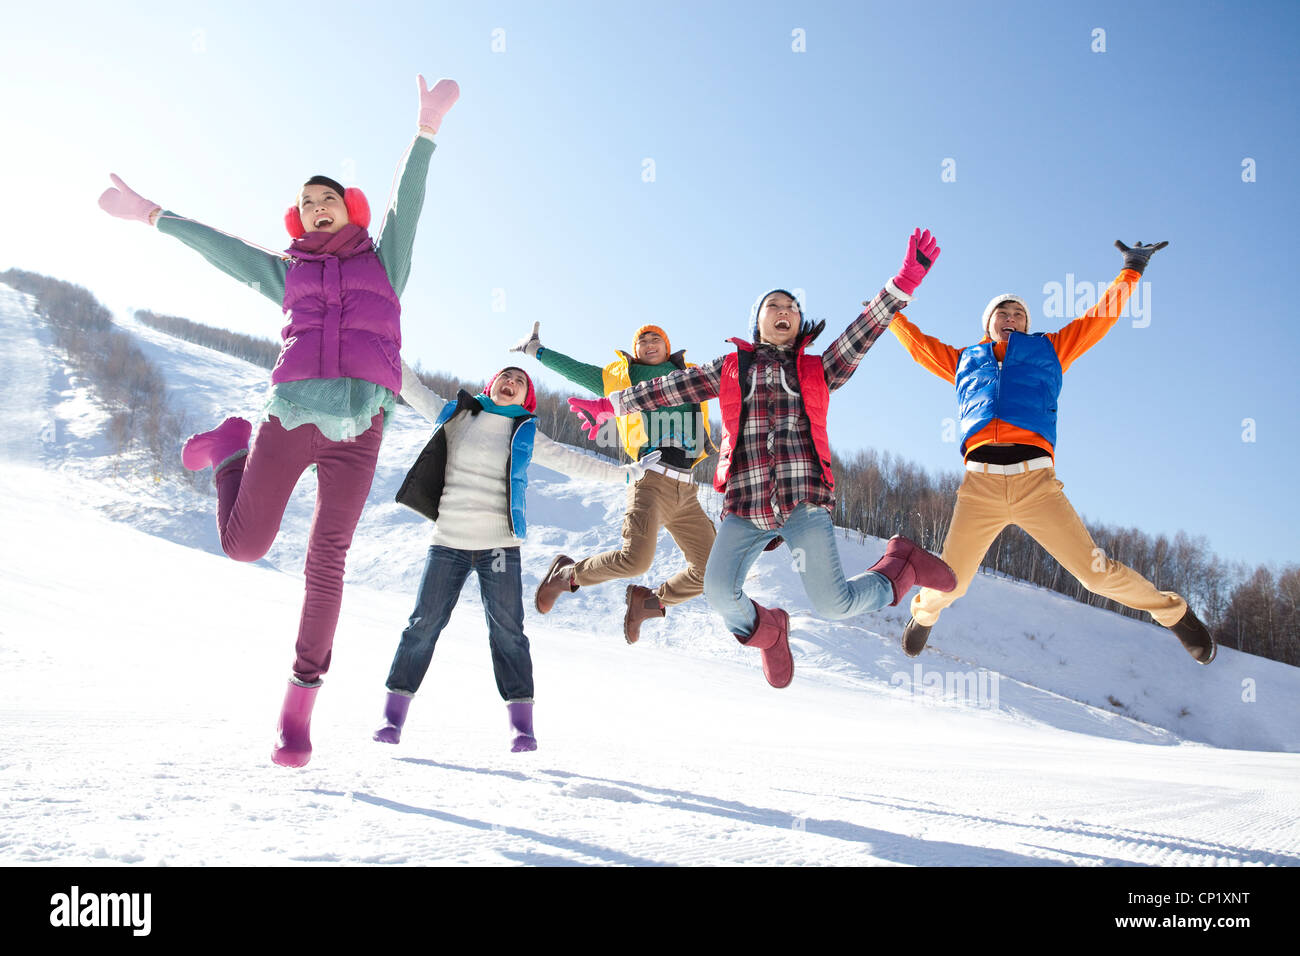 Young people having fun in snow Stock Photo - Alamy